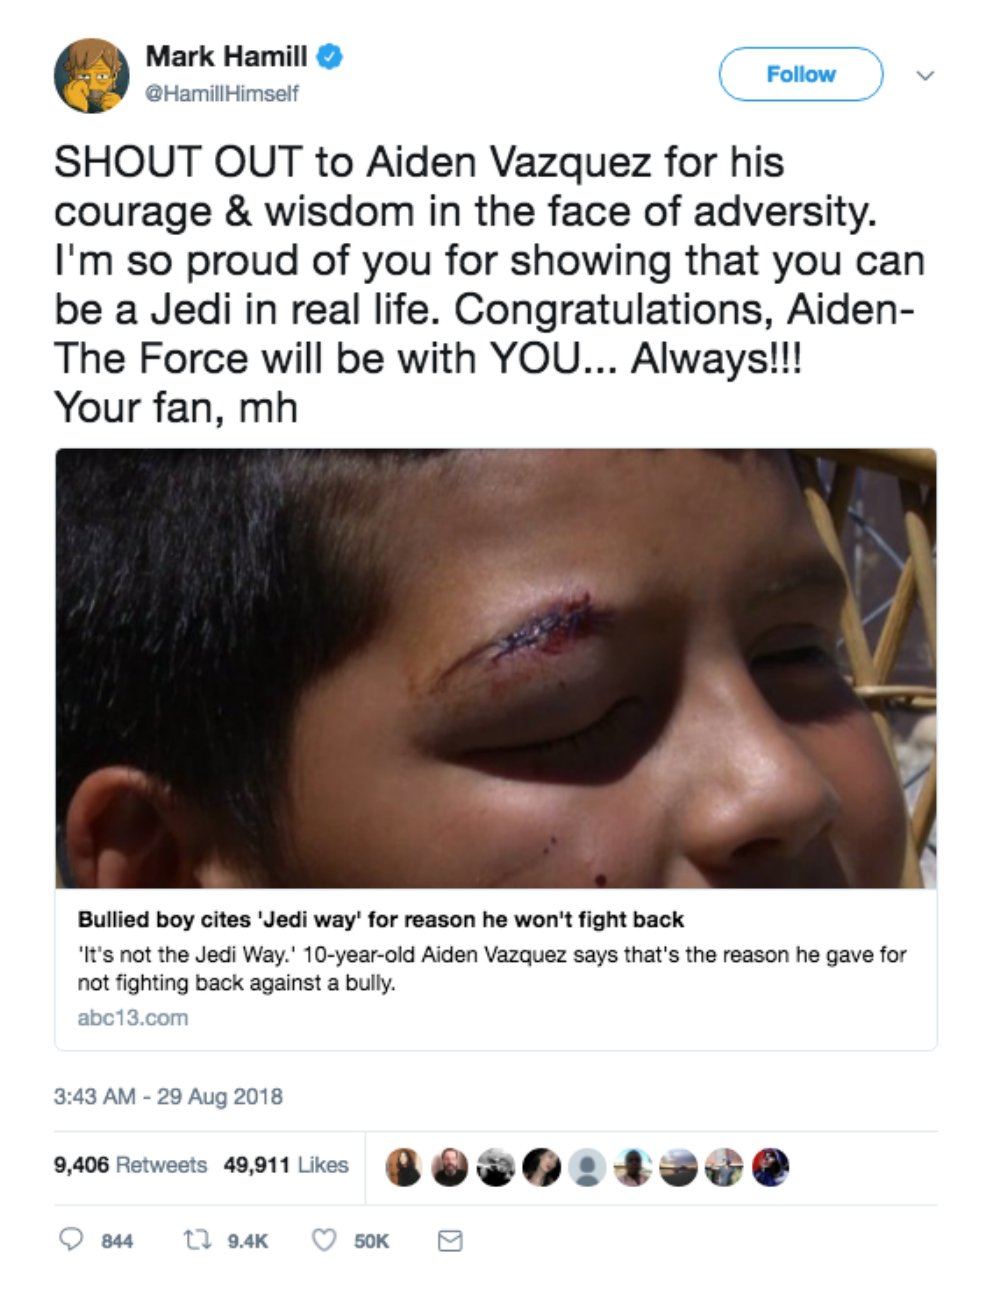 Mark Hamill praises bullied kid for following 'the Jedi way